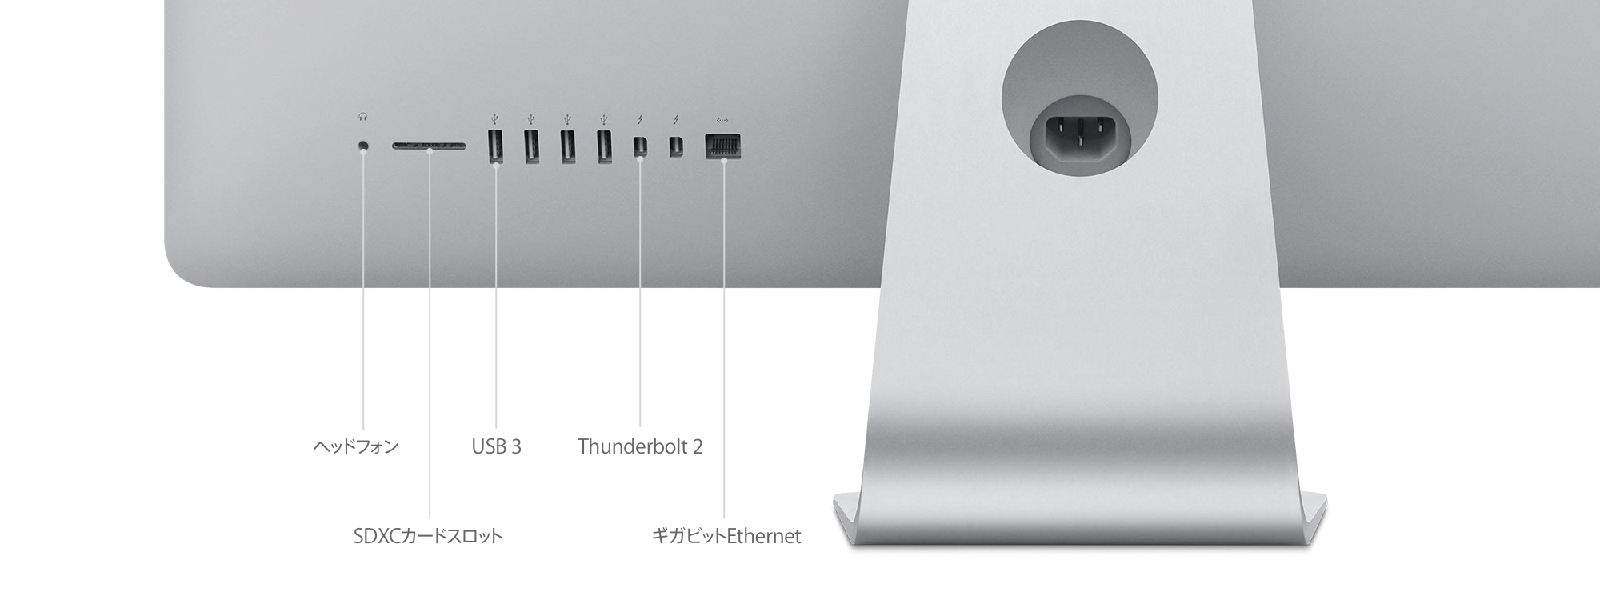 OSmacOSMonteApple iMac 27インチRetina 5K Late 2015